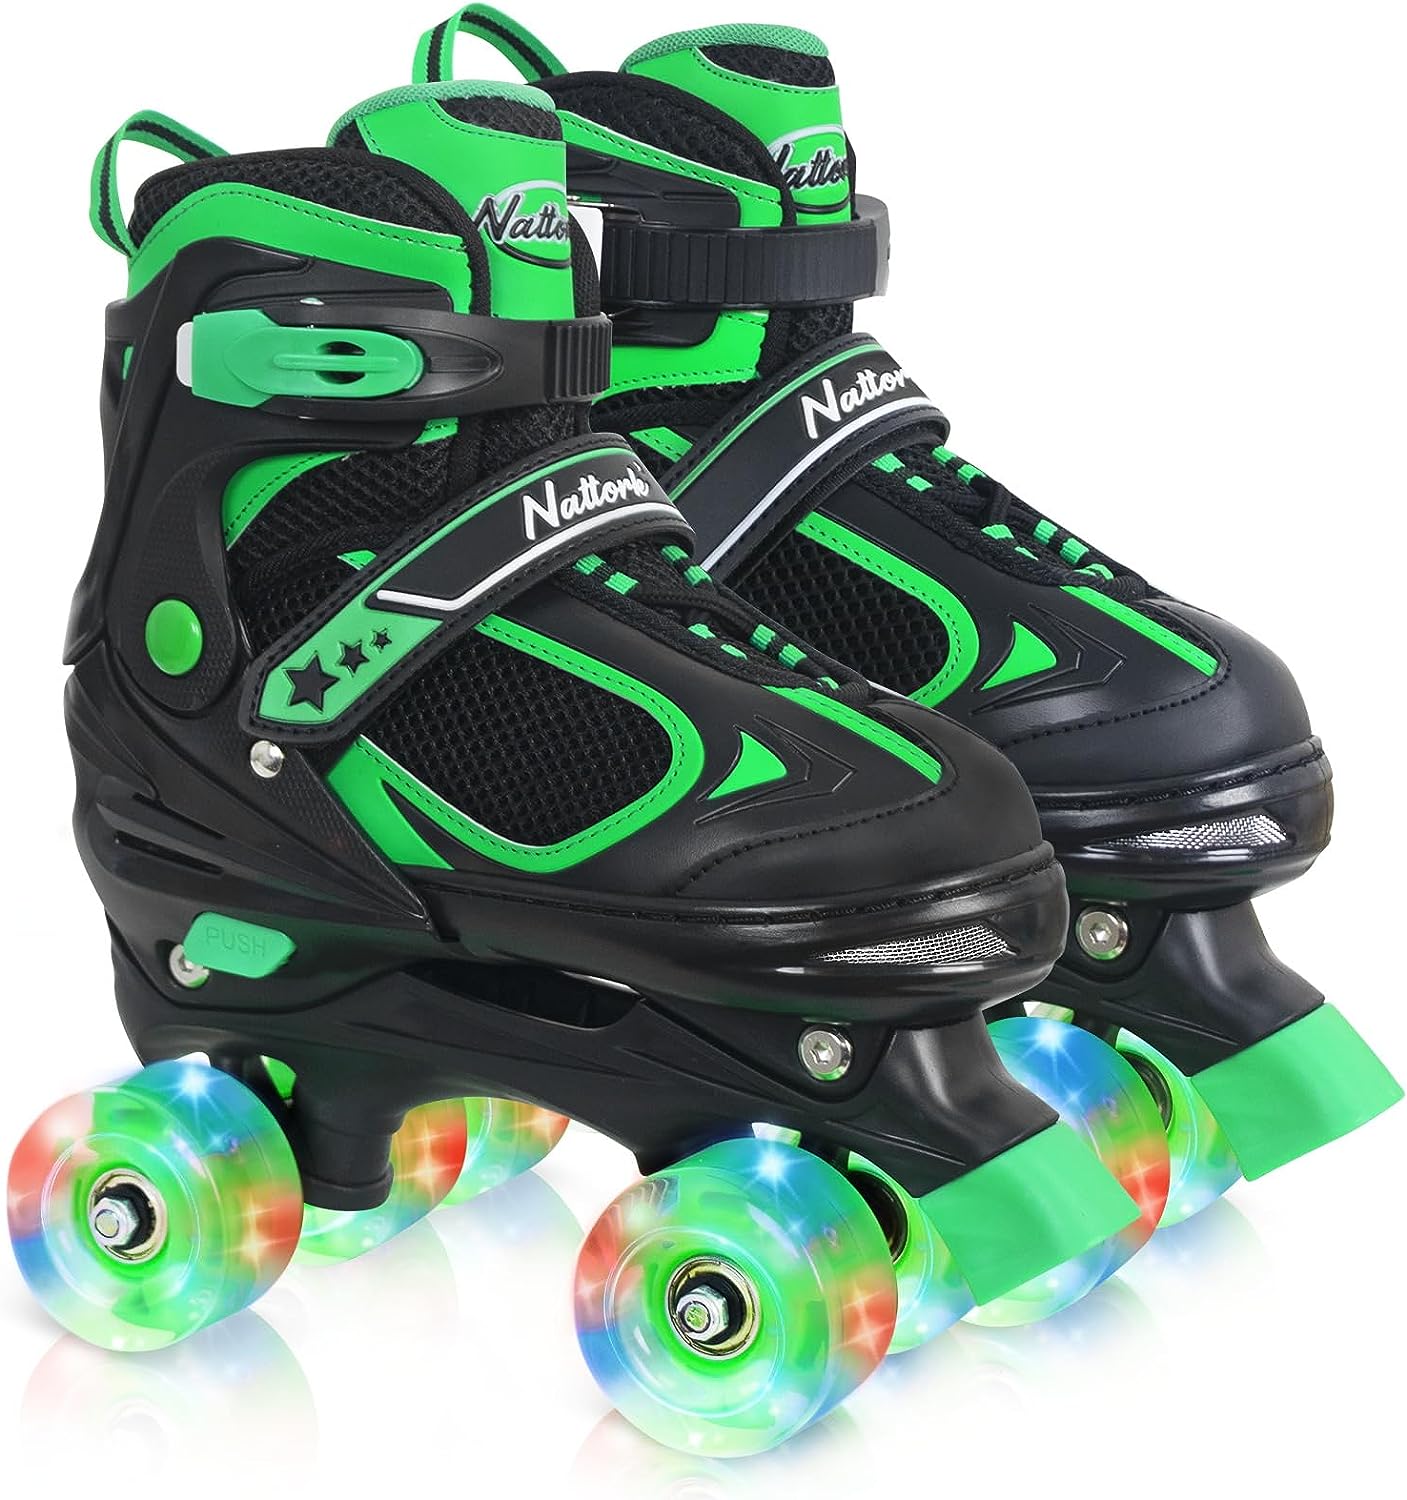 Nattork Kids Roller Skates for Boys & Girls , 4 Size Adjustable